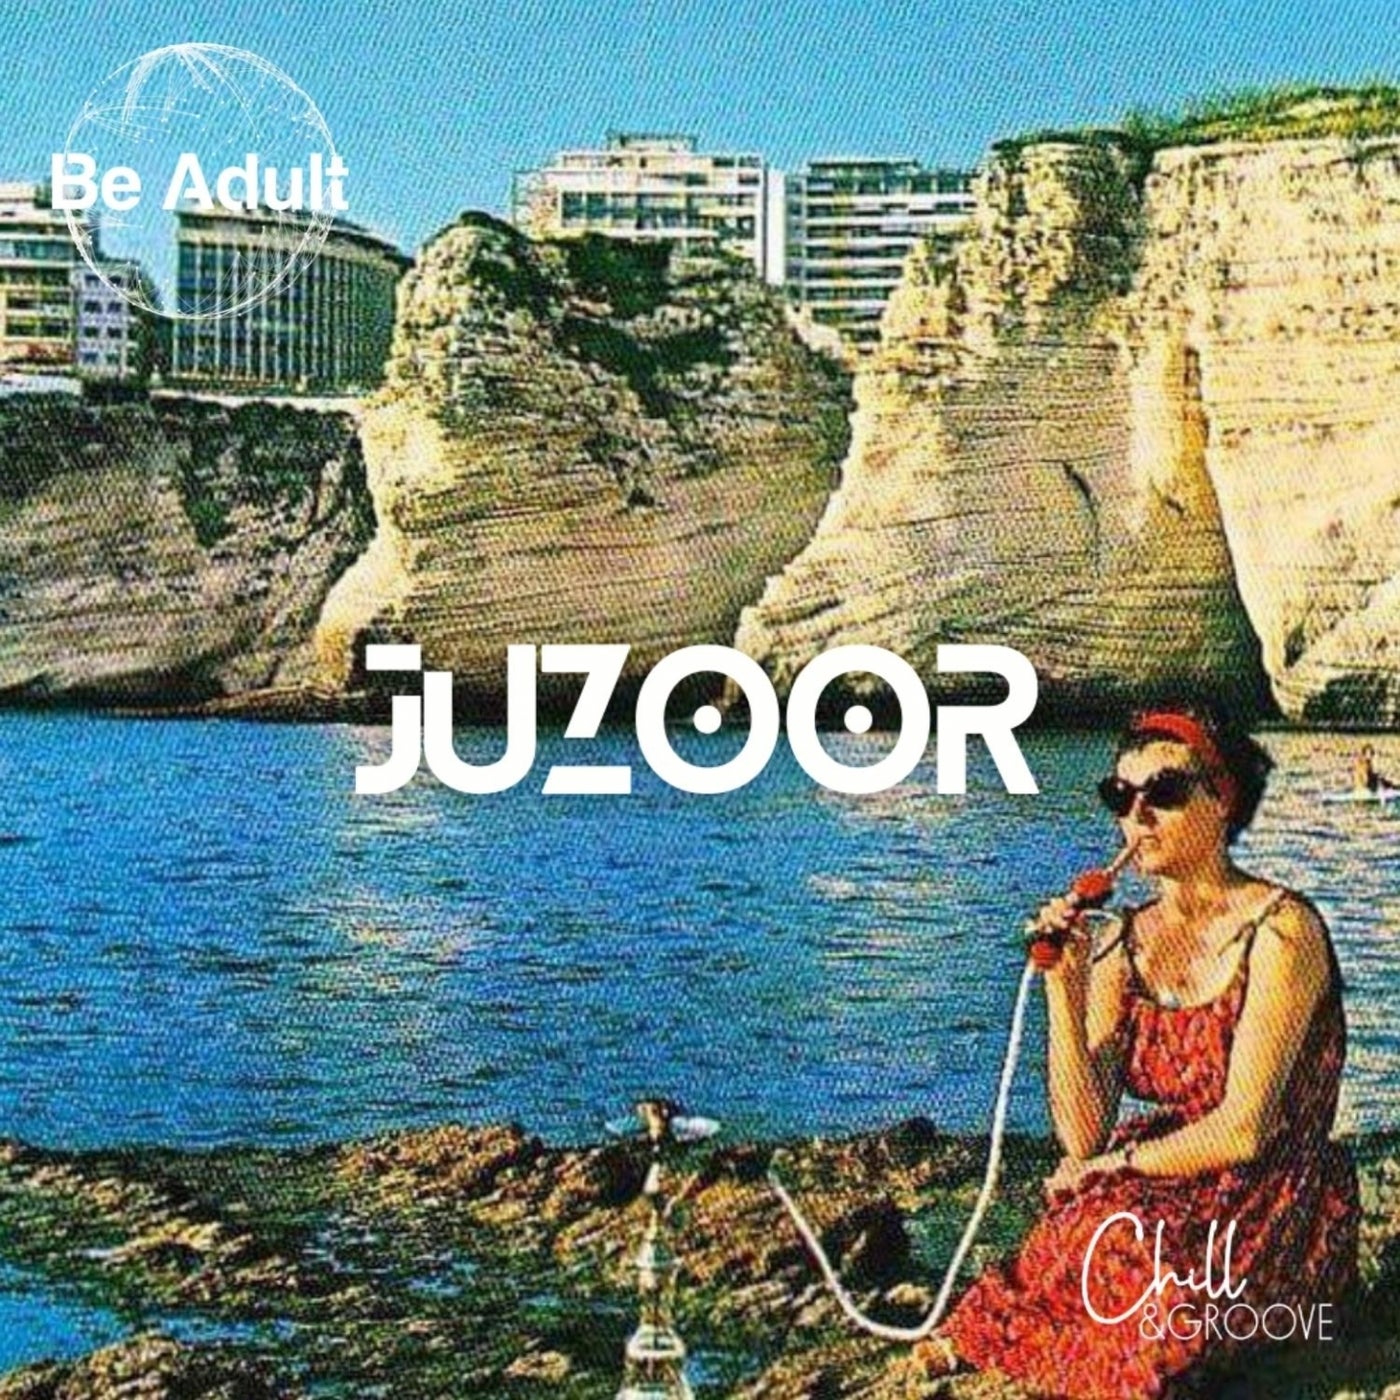 Chill & Groove - Juzoor [248]